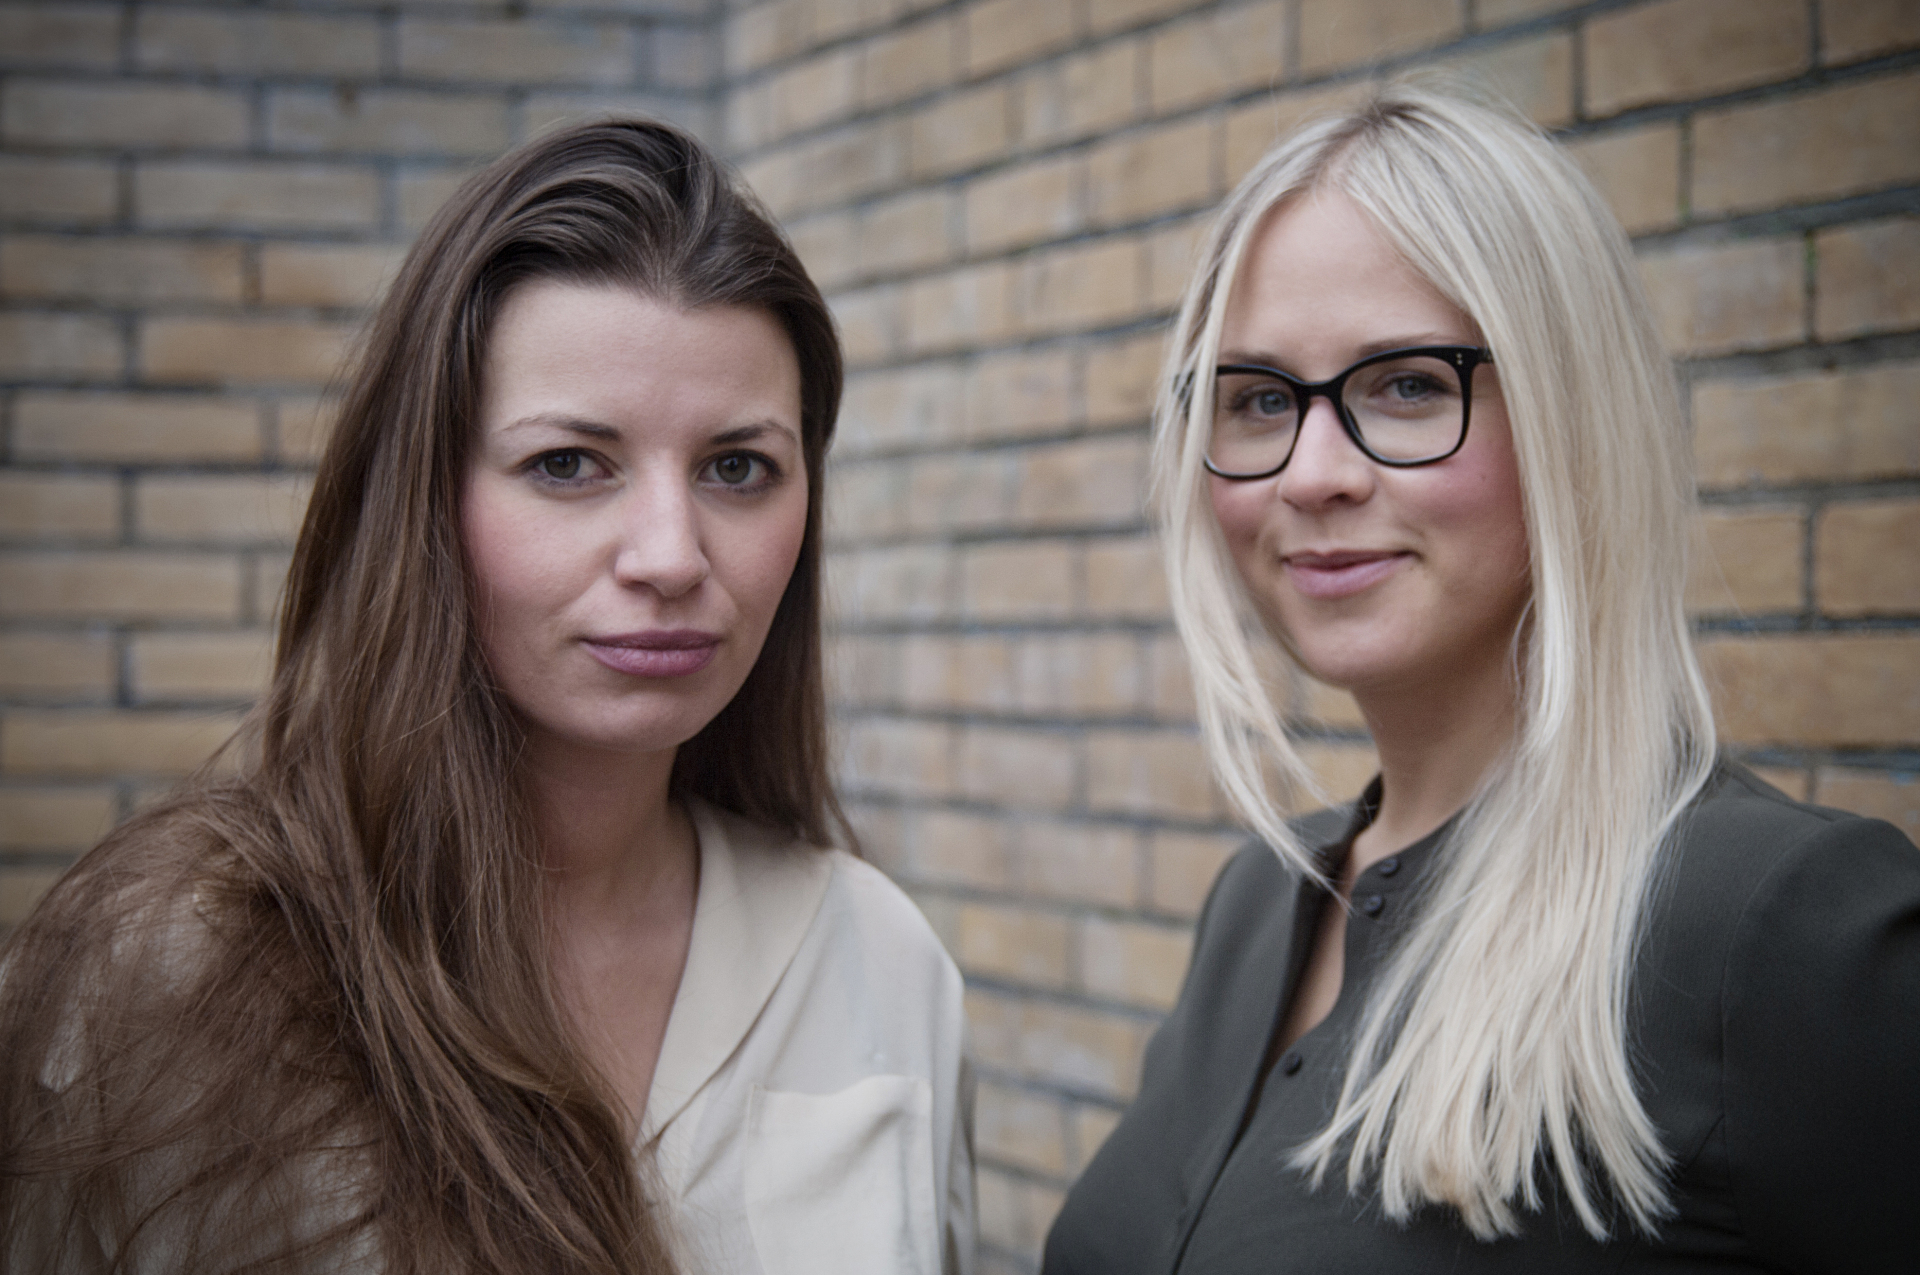 Nora-Vanessa Wohlert + Susann Hoffmann (founders of Edition F)